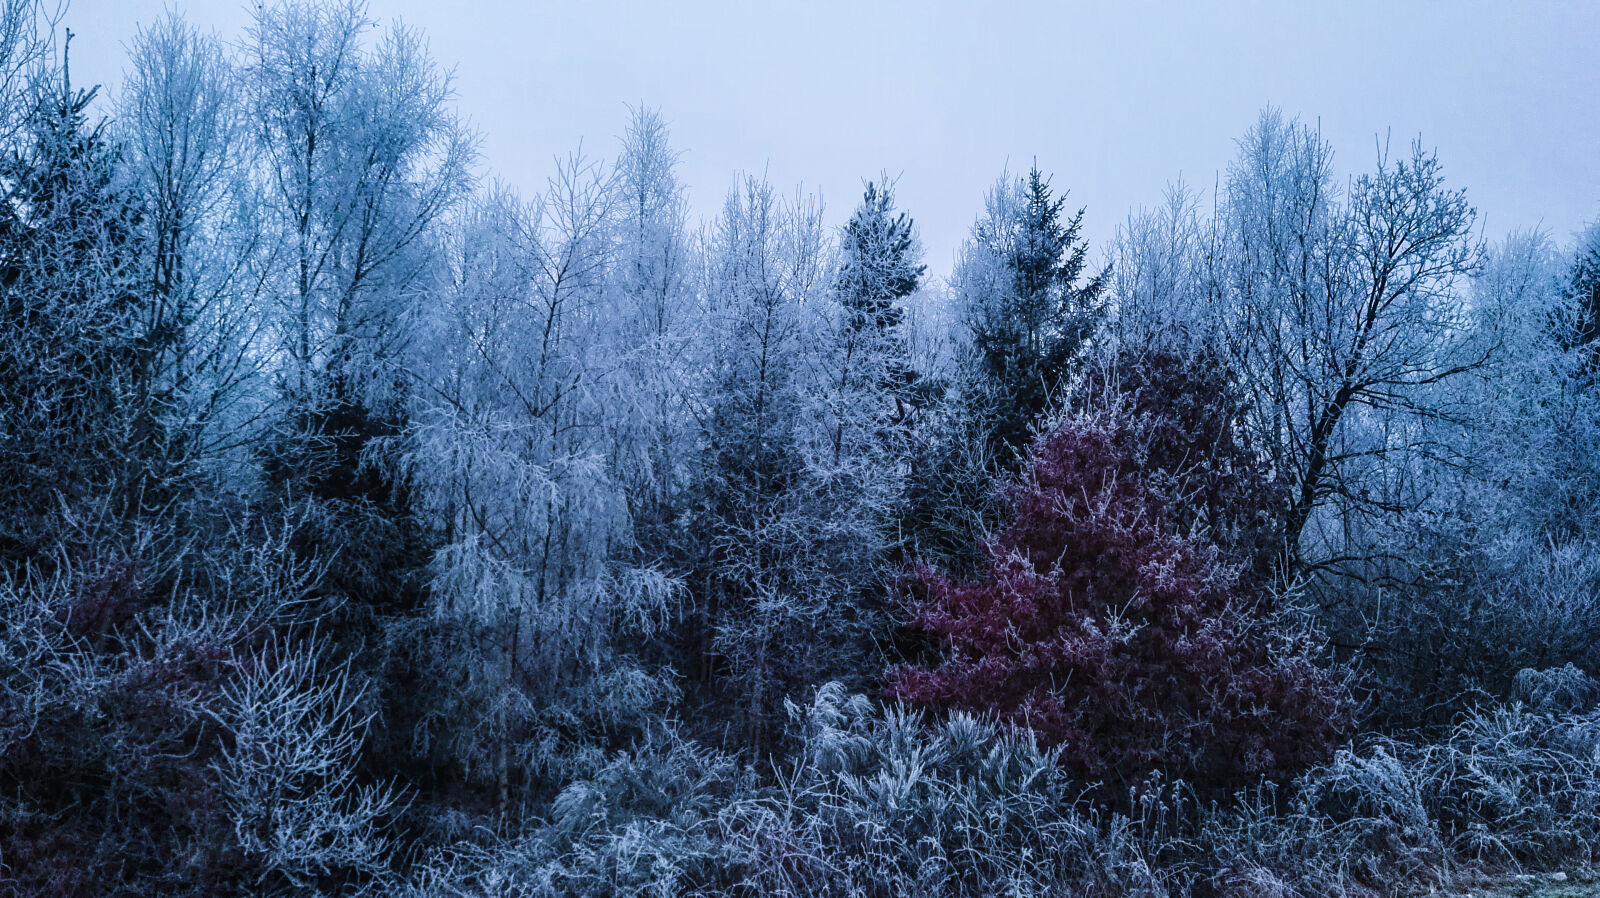 HUAWEI P8 sample photo. Ice, snow, trees, winter photography